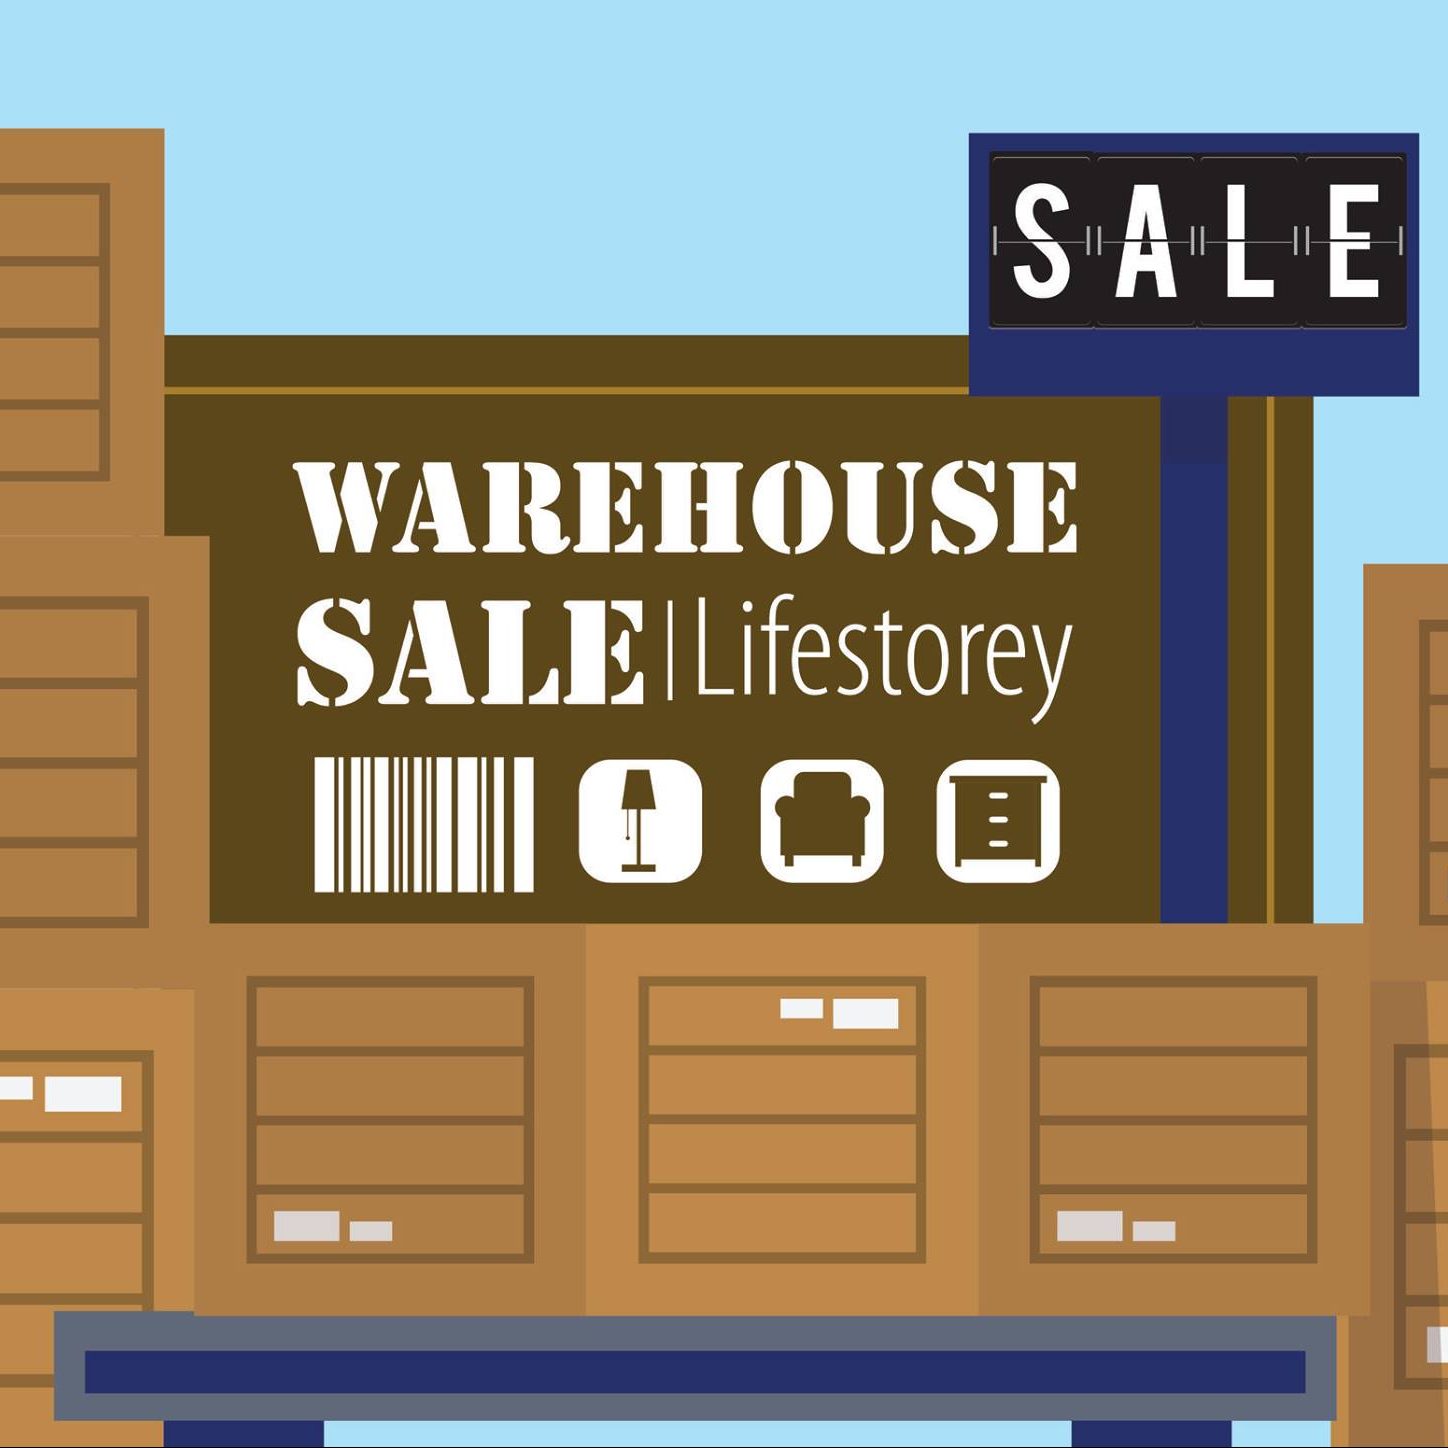 Lifestorey Warehouse Sale Singapore Promotion 2 to 10 Jul 2016